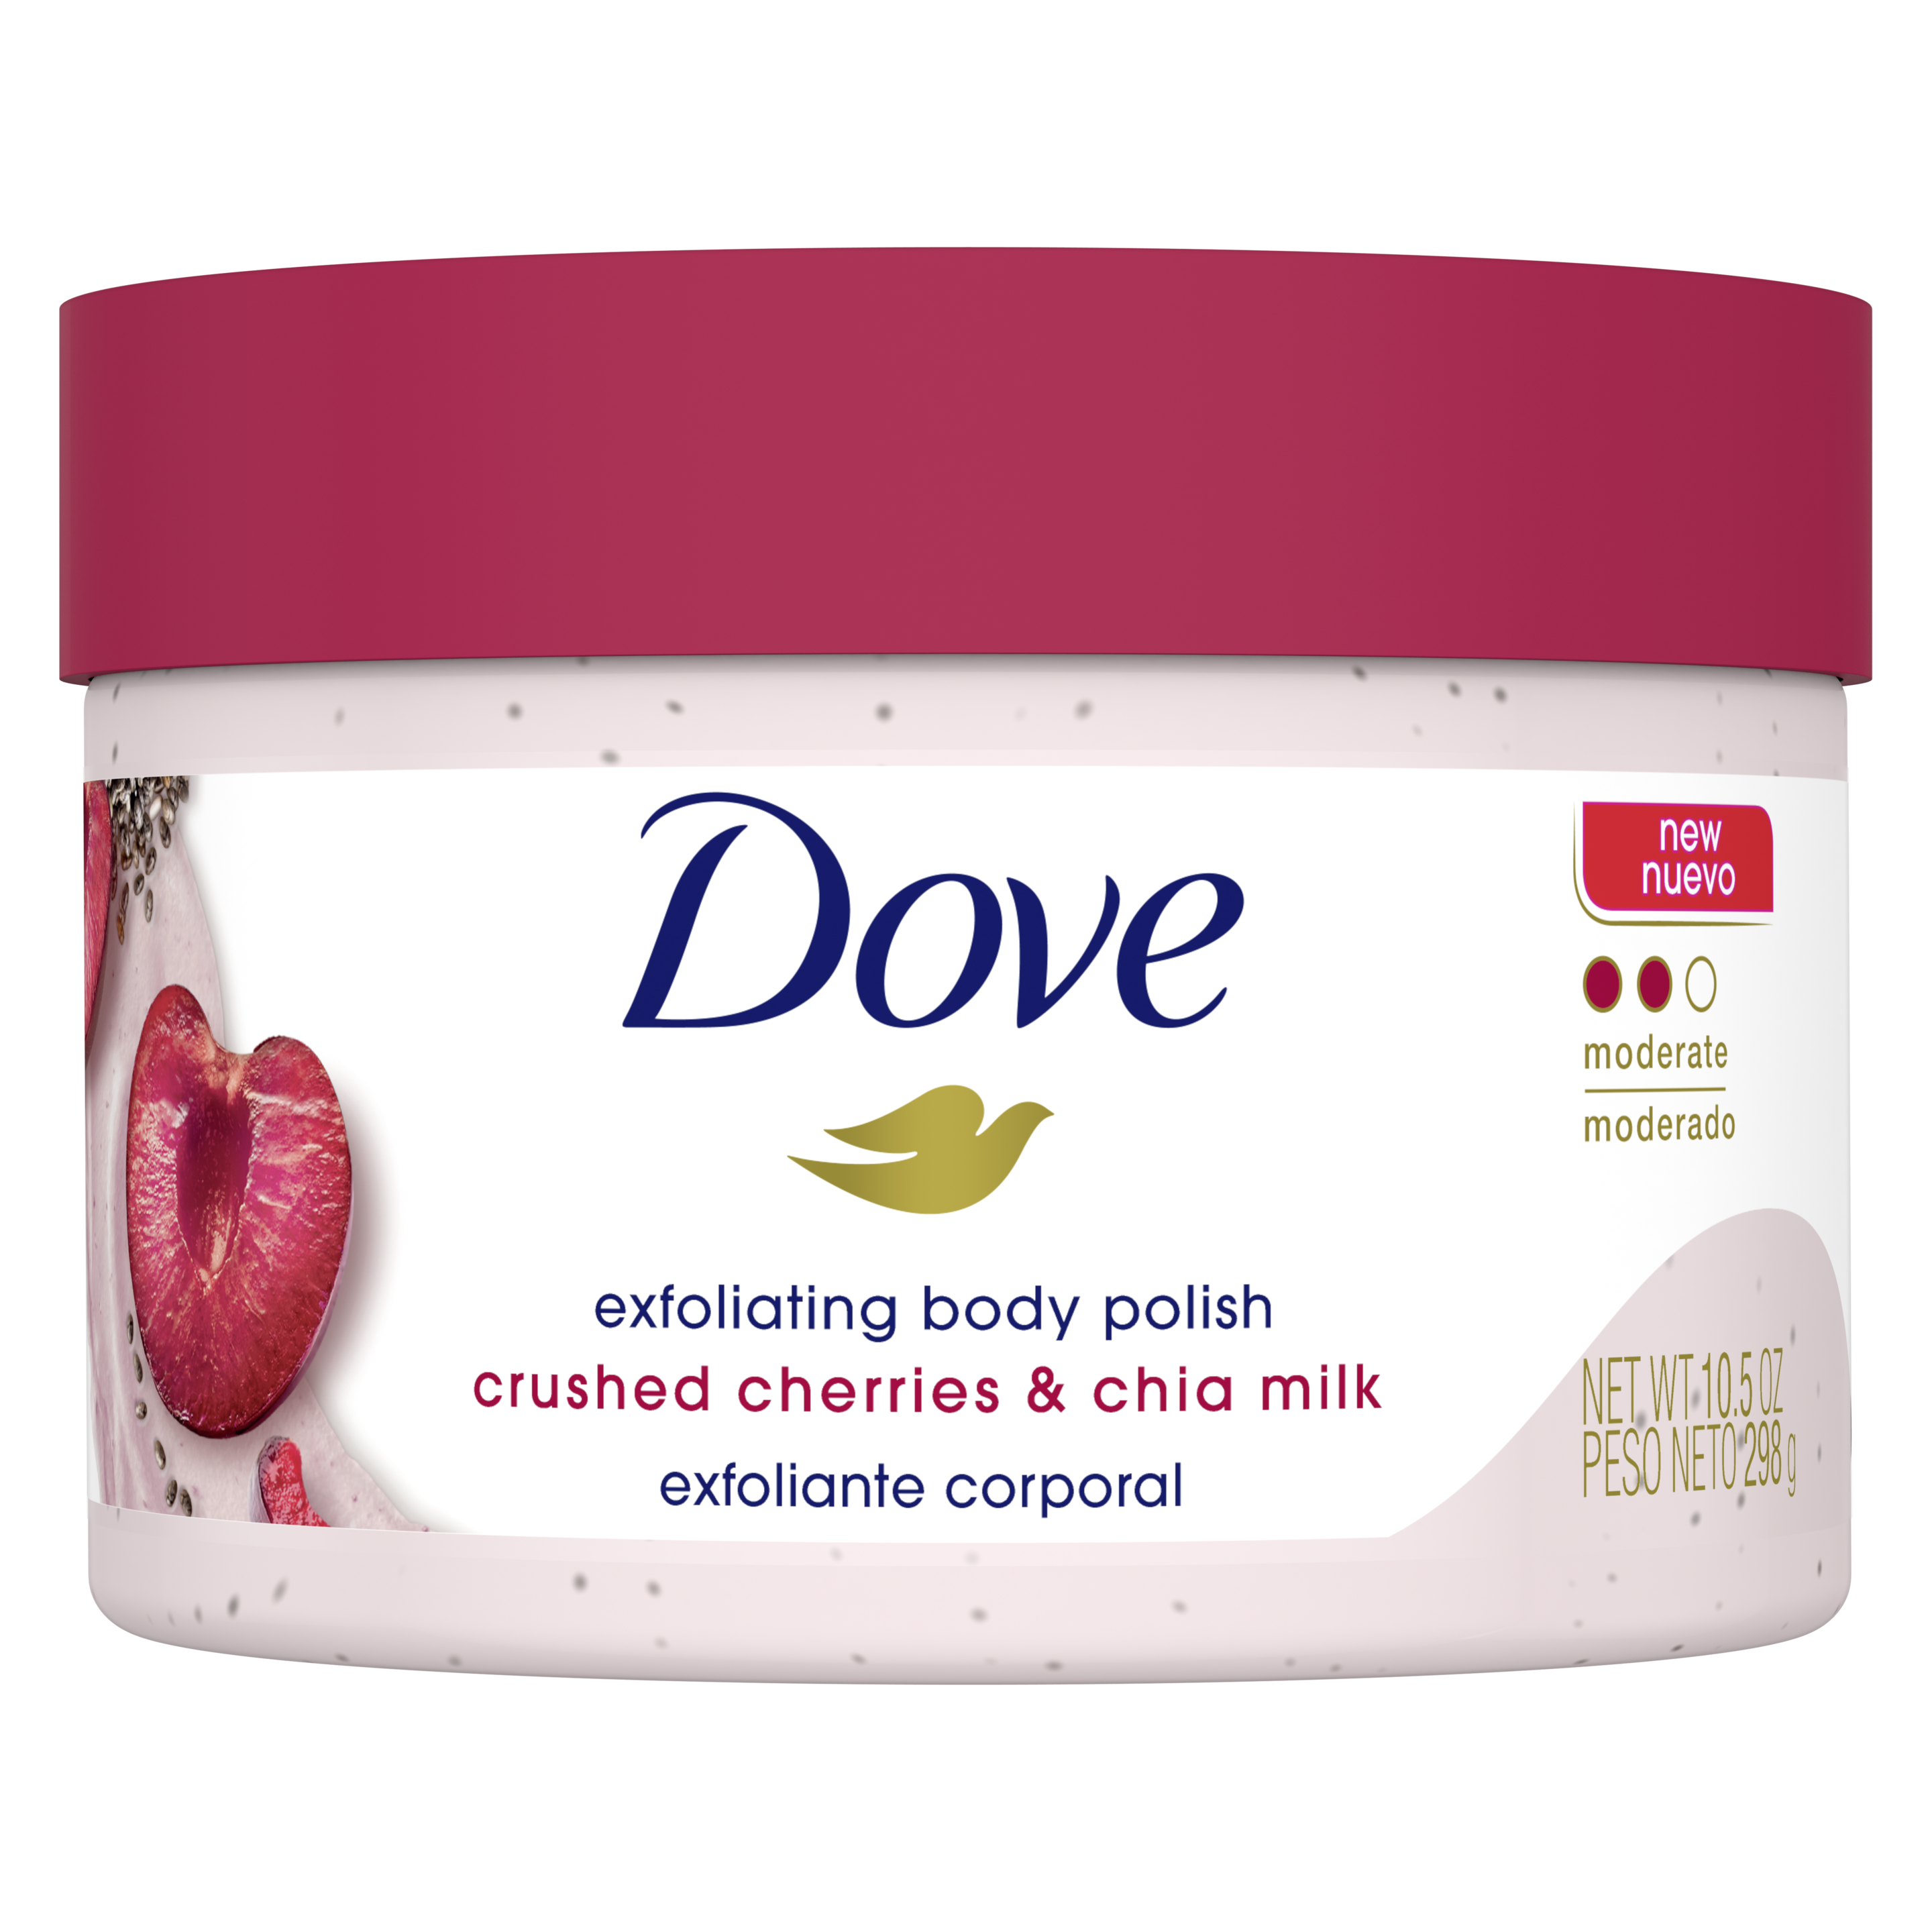 Dove Body Polish with Crushed Cherries & Chia Milk